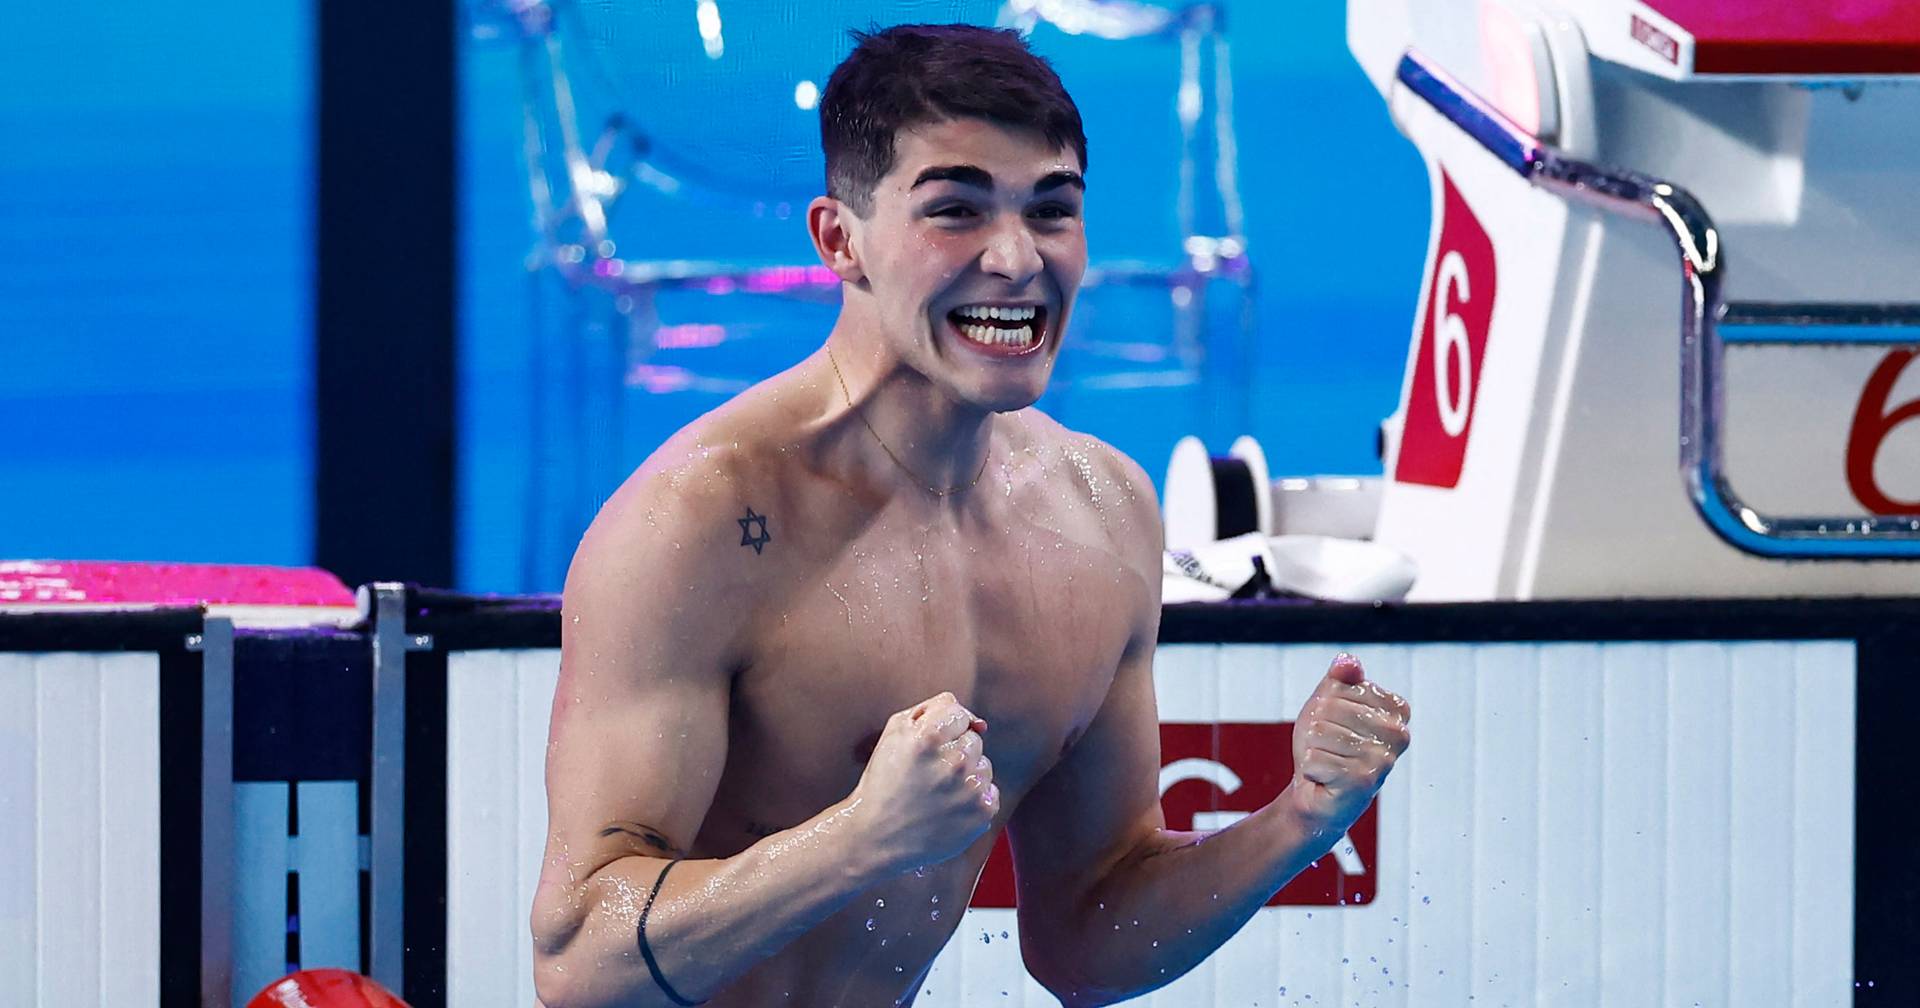 Diogo Ribeiro Makes History as First National Swimming World Champion